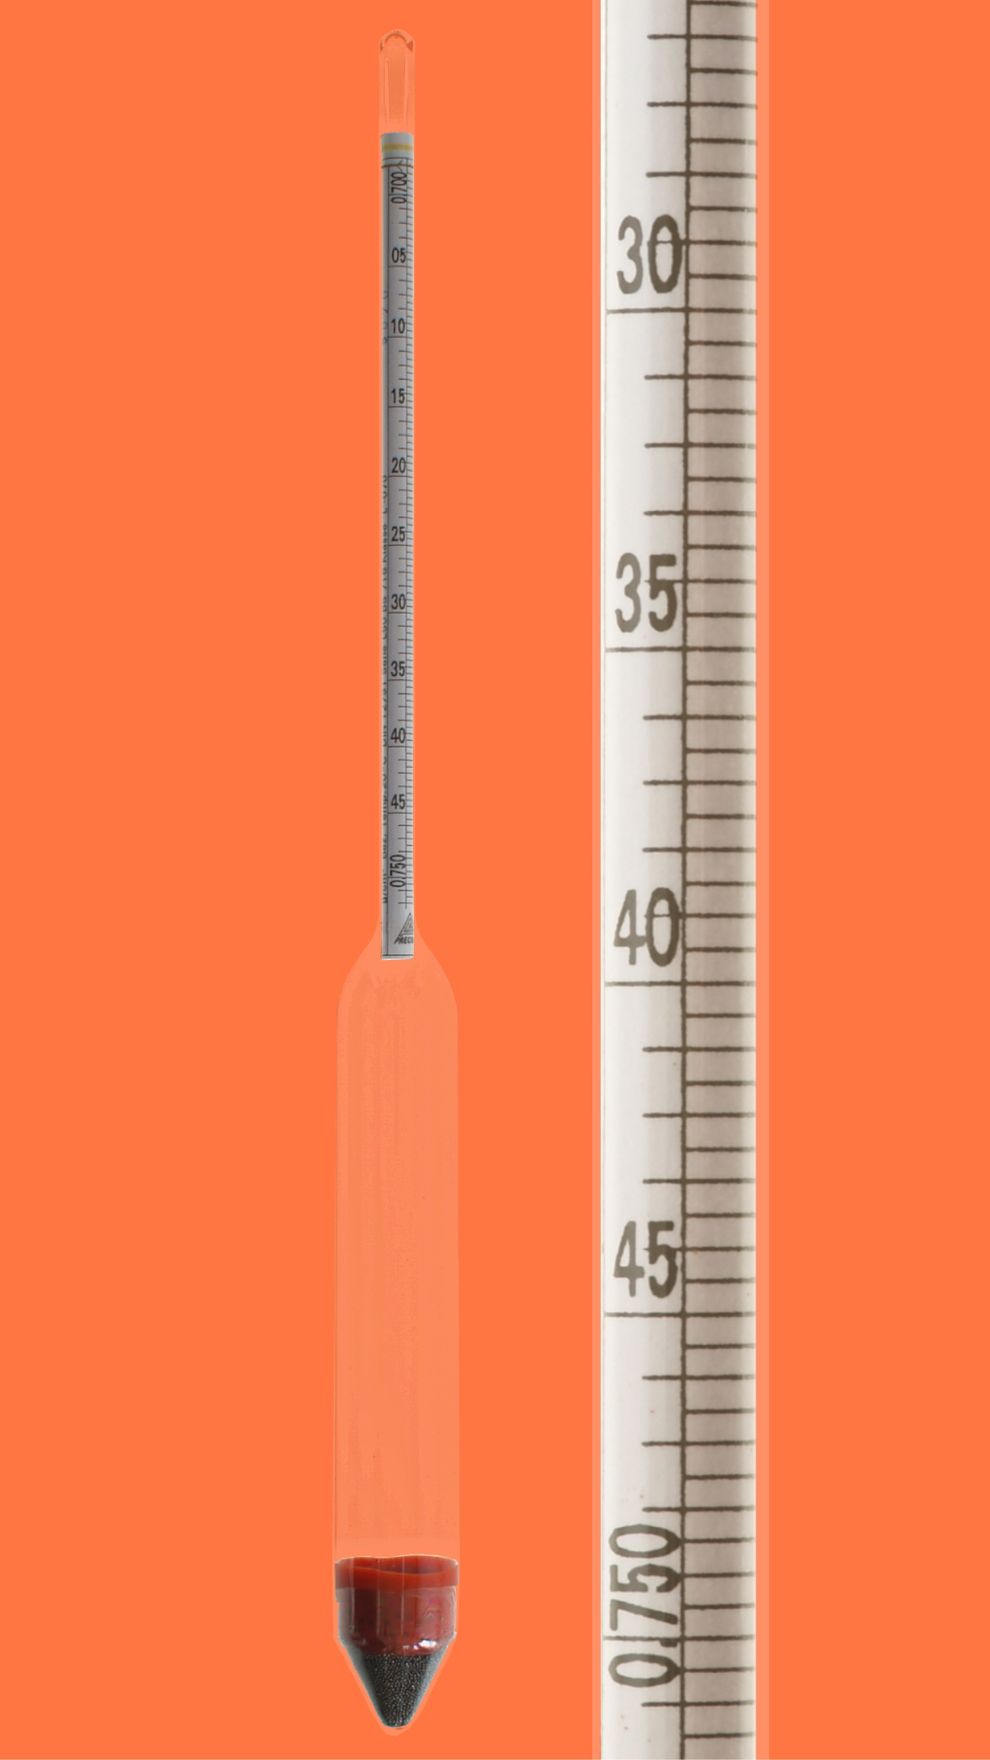 Aräometer, DIN 12791, L50, 0,75-0,80:0,0005g/cm³, Bezugstemp. 20°C, ohne Thermometer